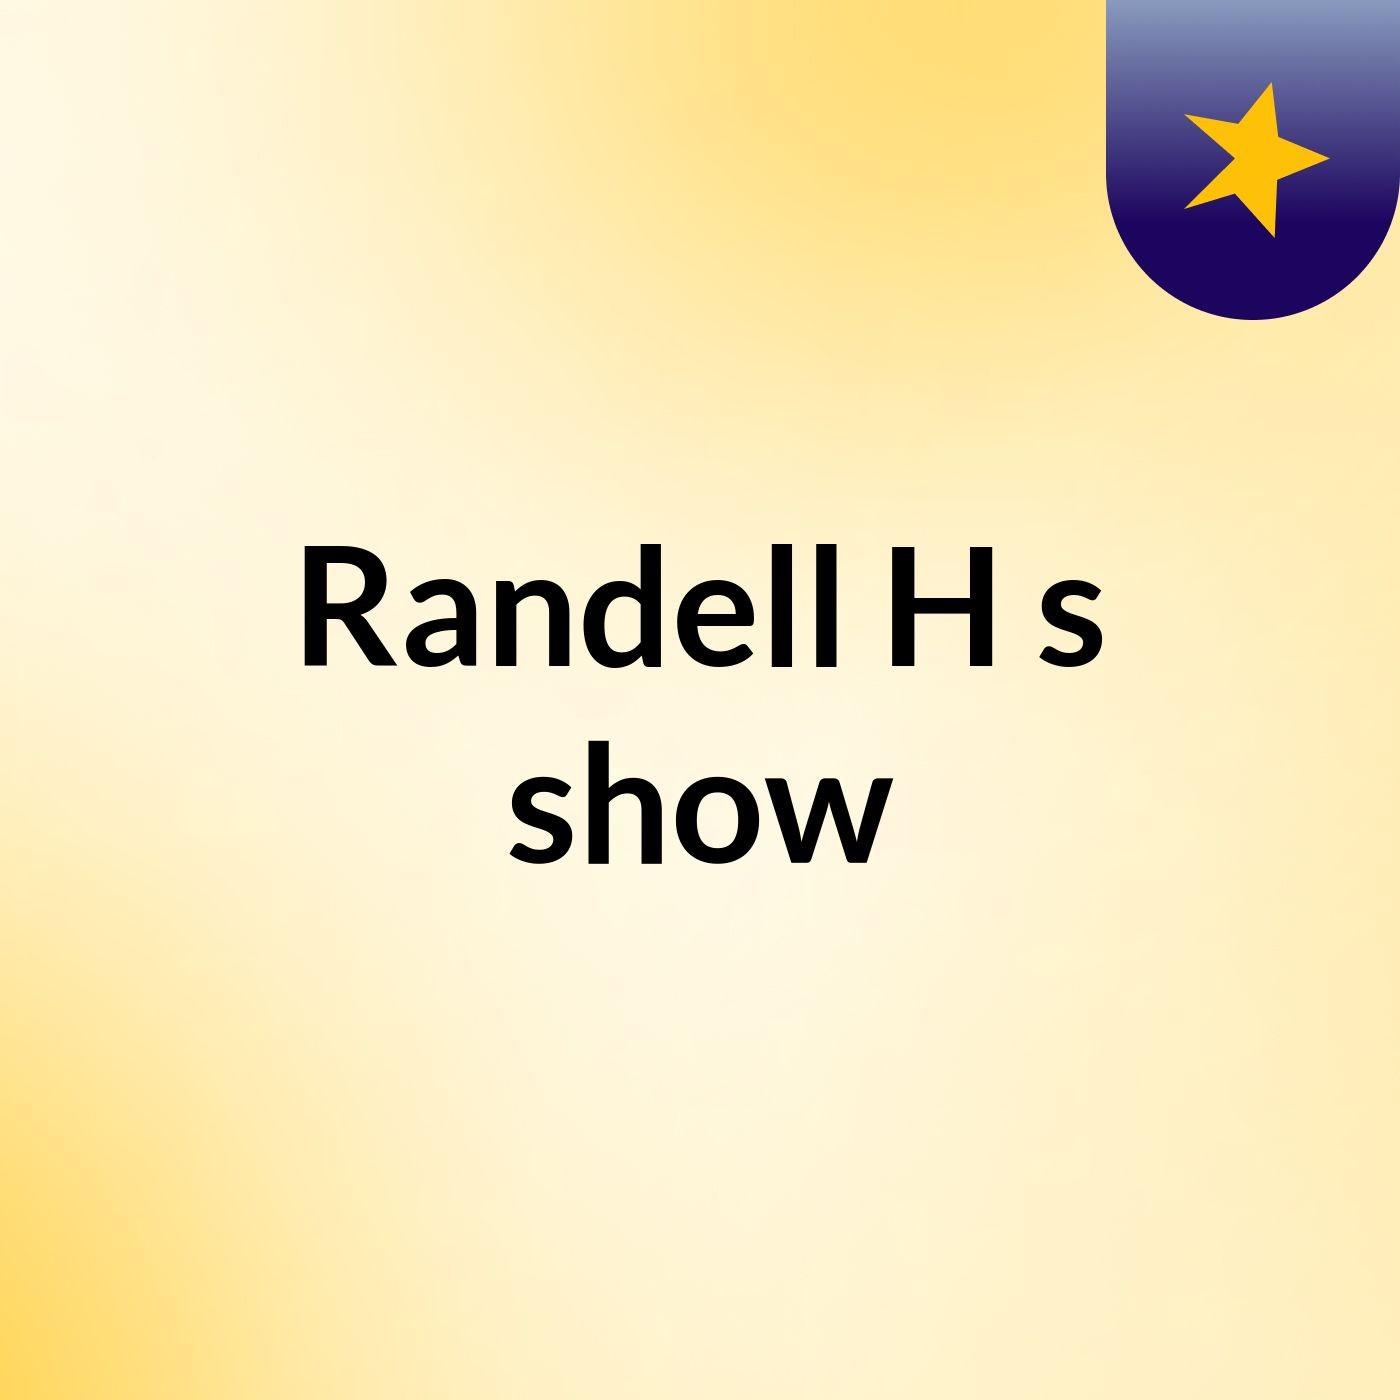 Randell H's show